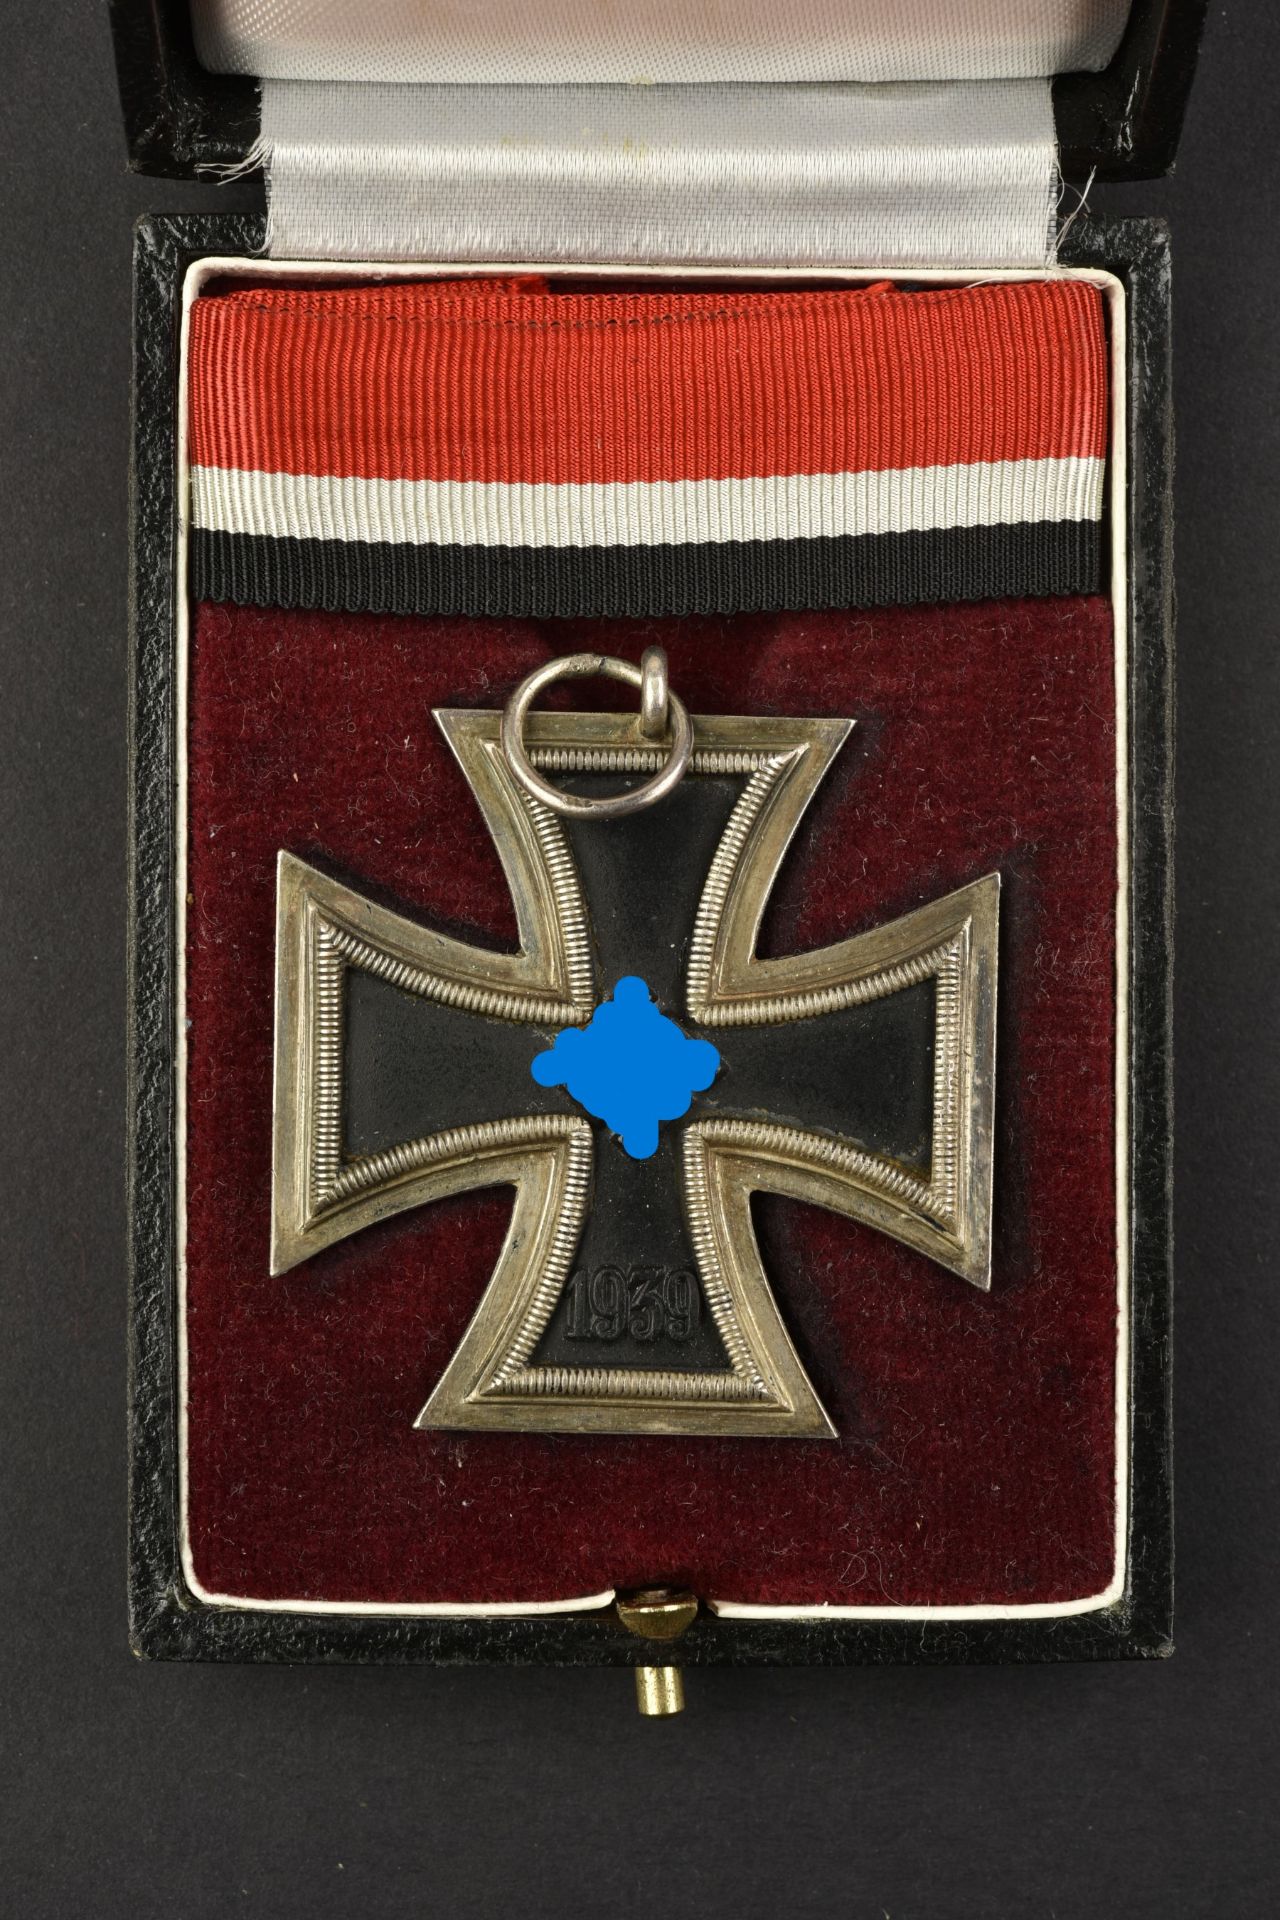 Croix de fer de seconde classe. Second-class iron cross. - Image 4 of 4